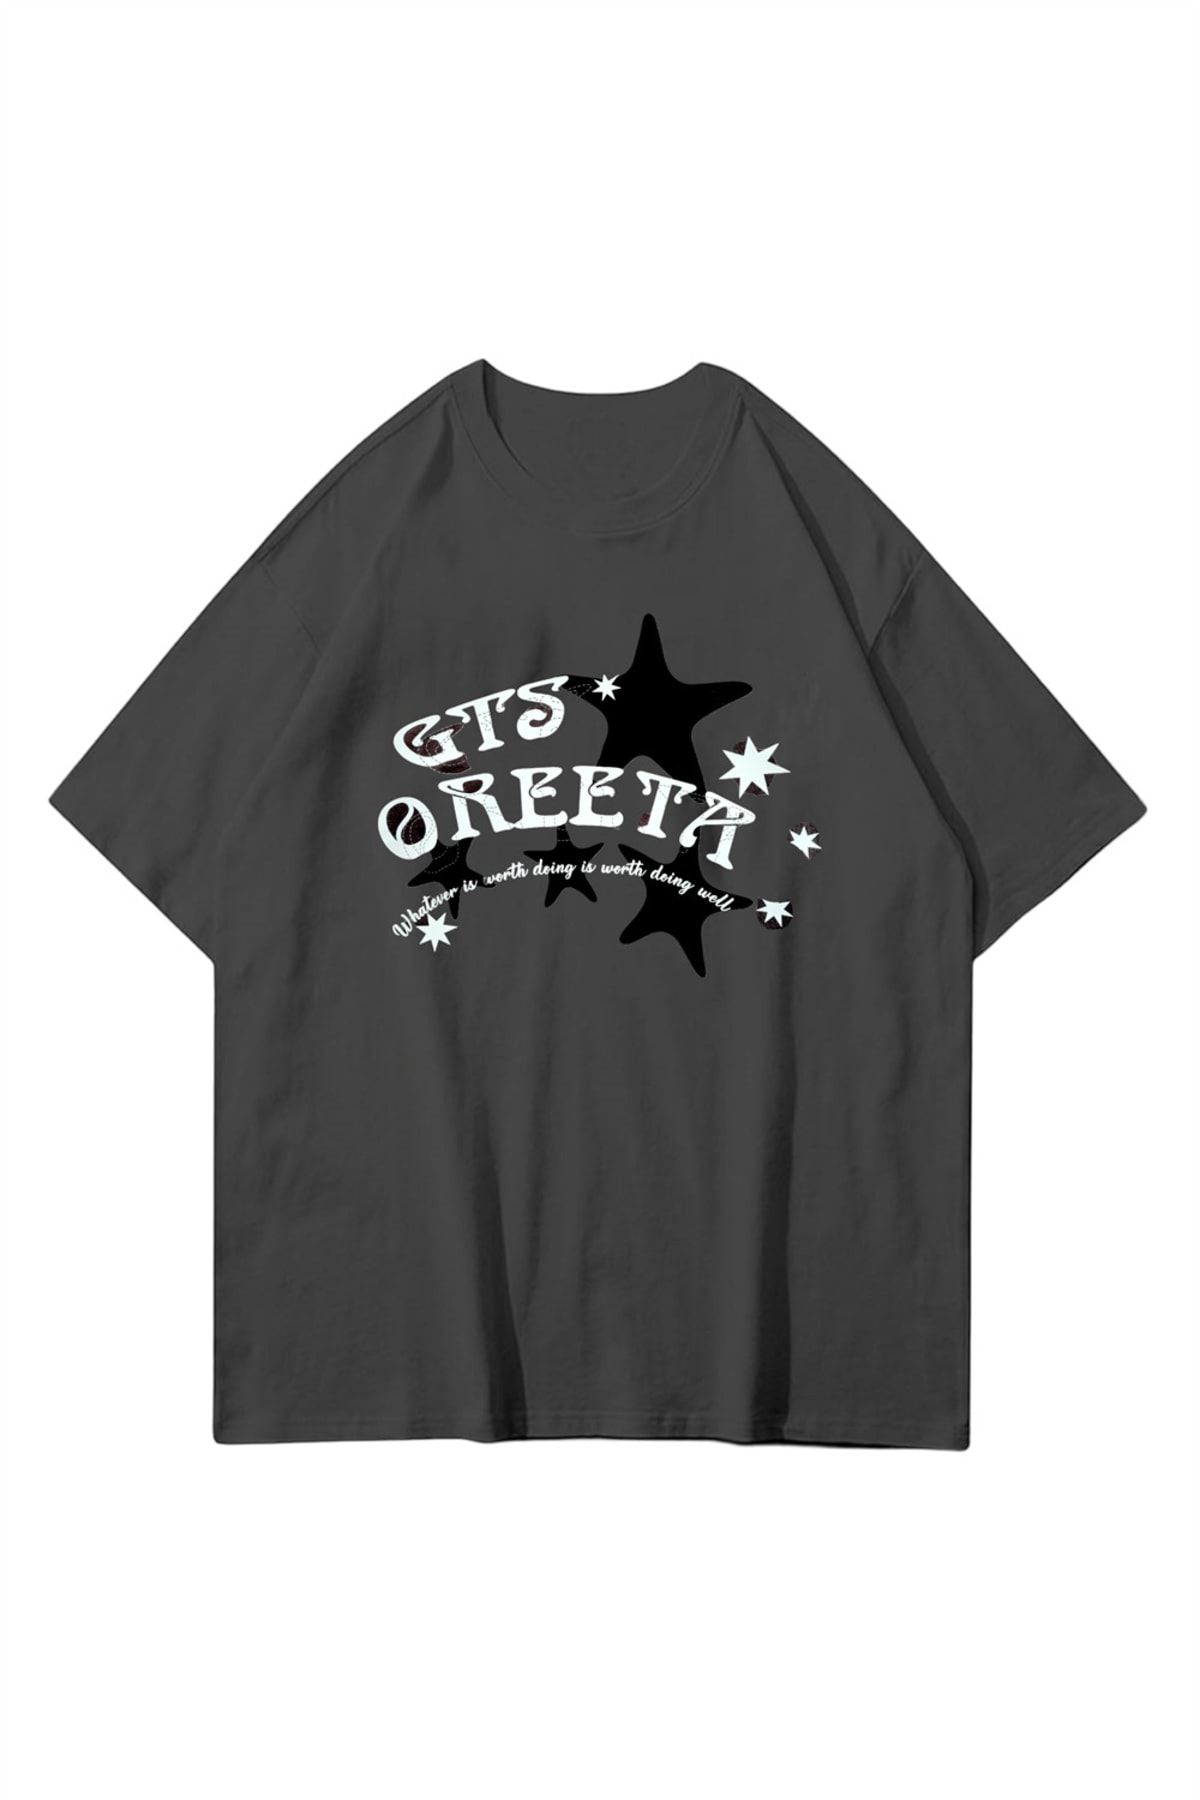 Carpe Gts Oreeta Oversize T-shirt